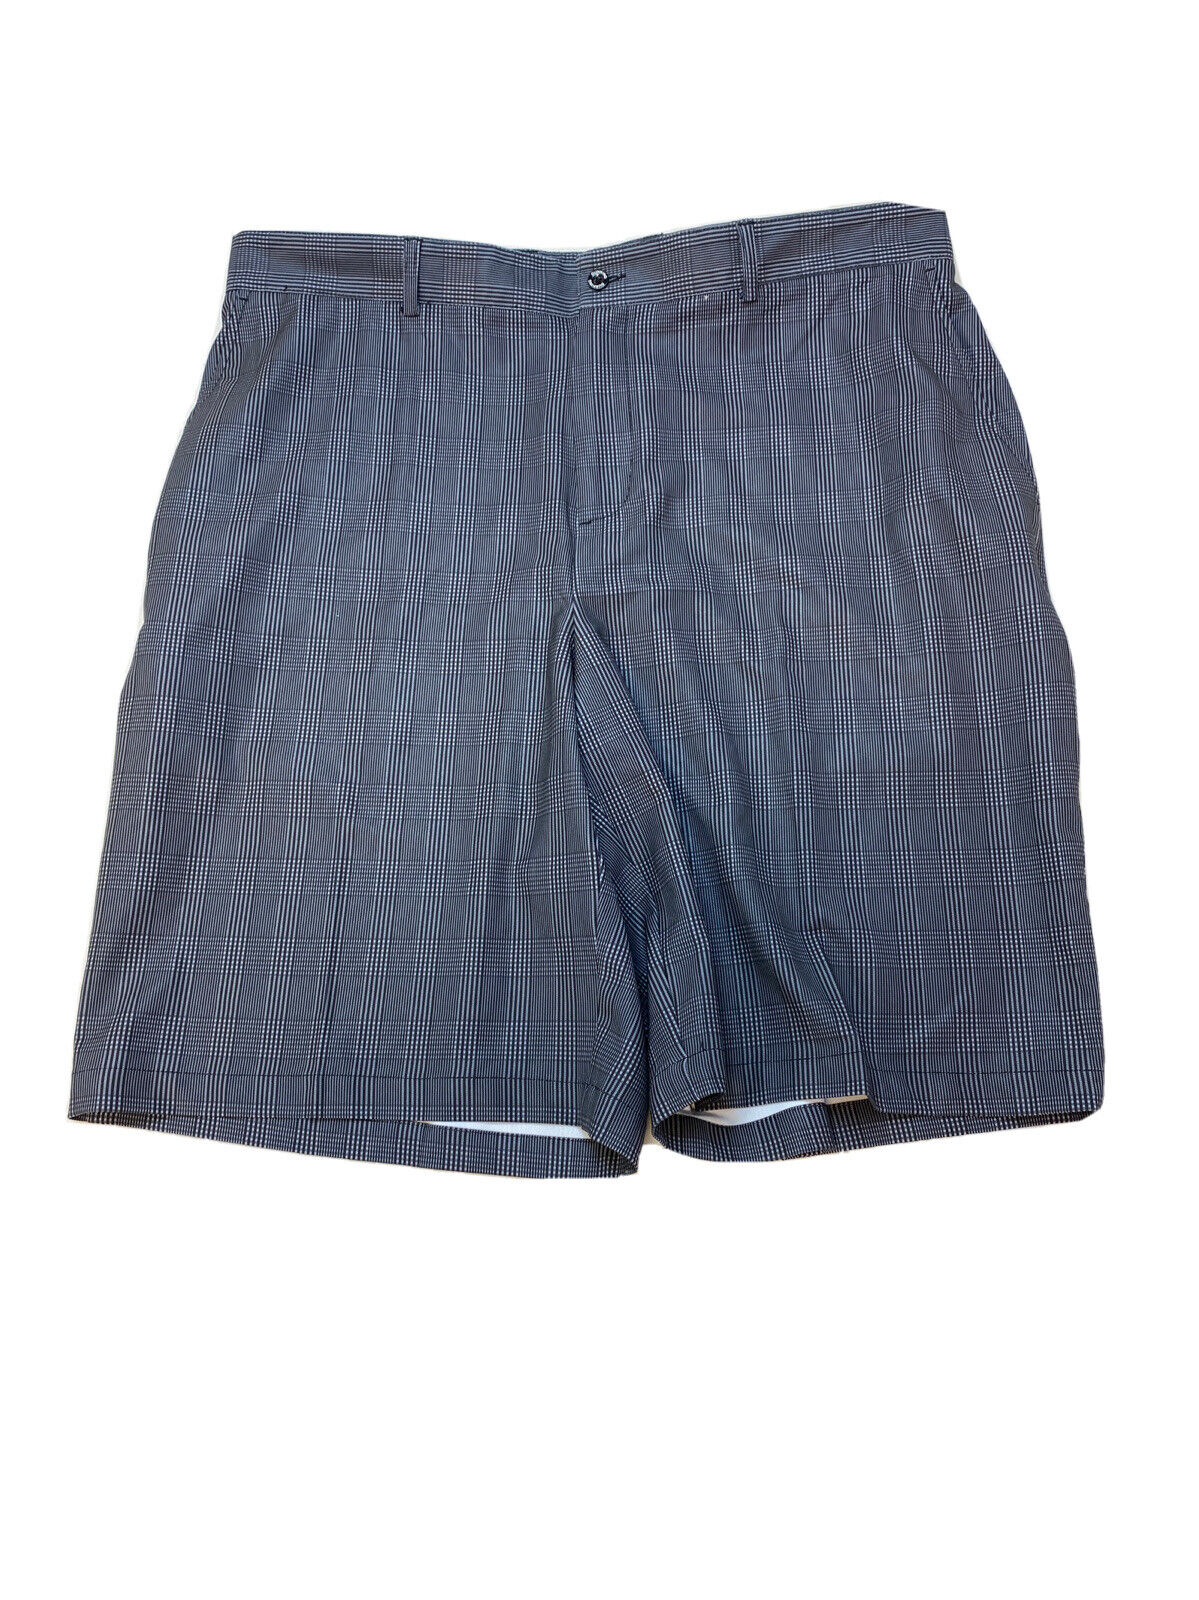 Dunning - Pantalones cortos de golf elásticos de poliéster a cuadros grises para hombre, talla 38